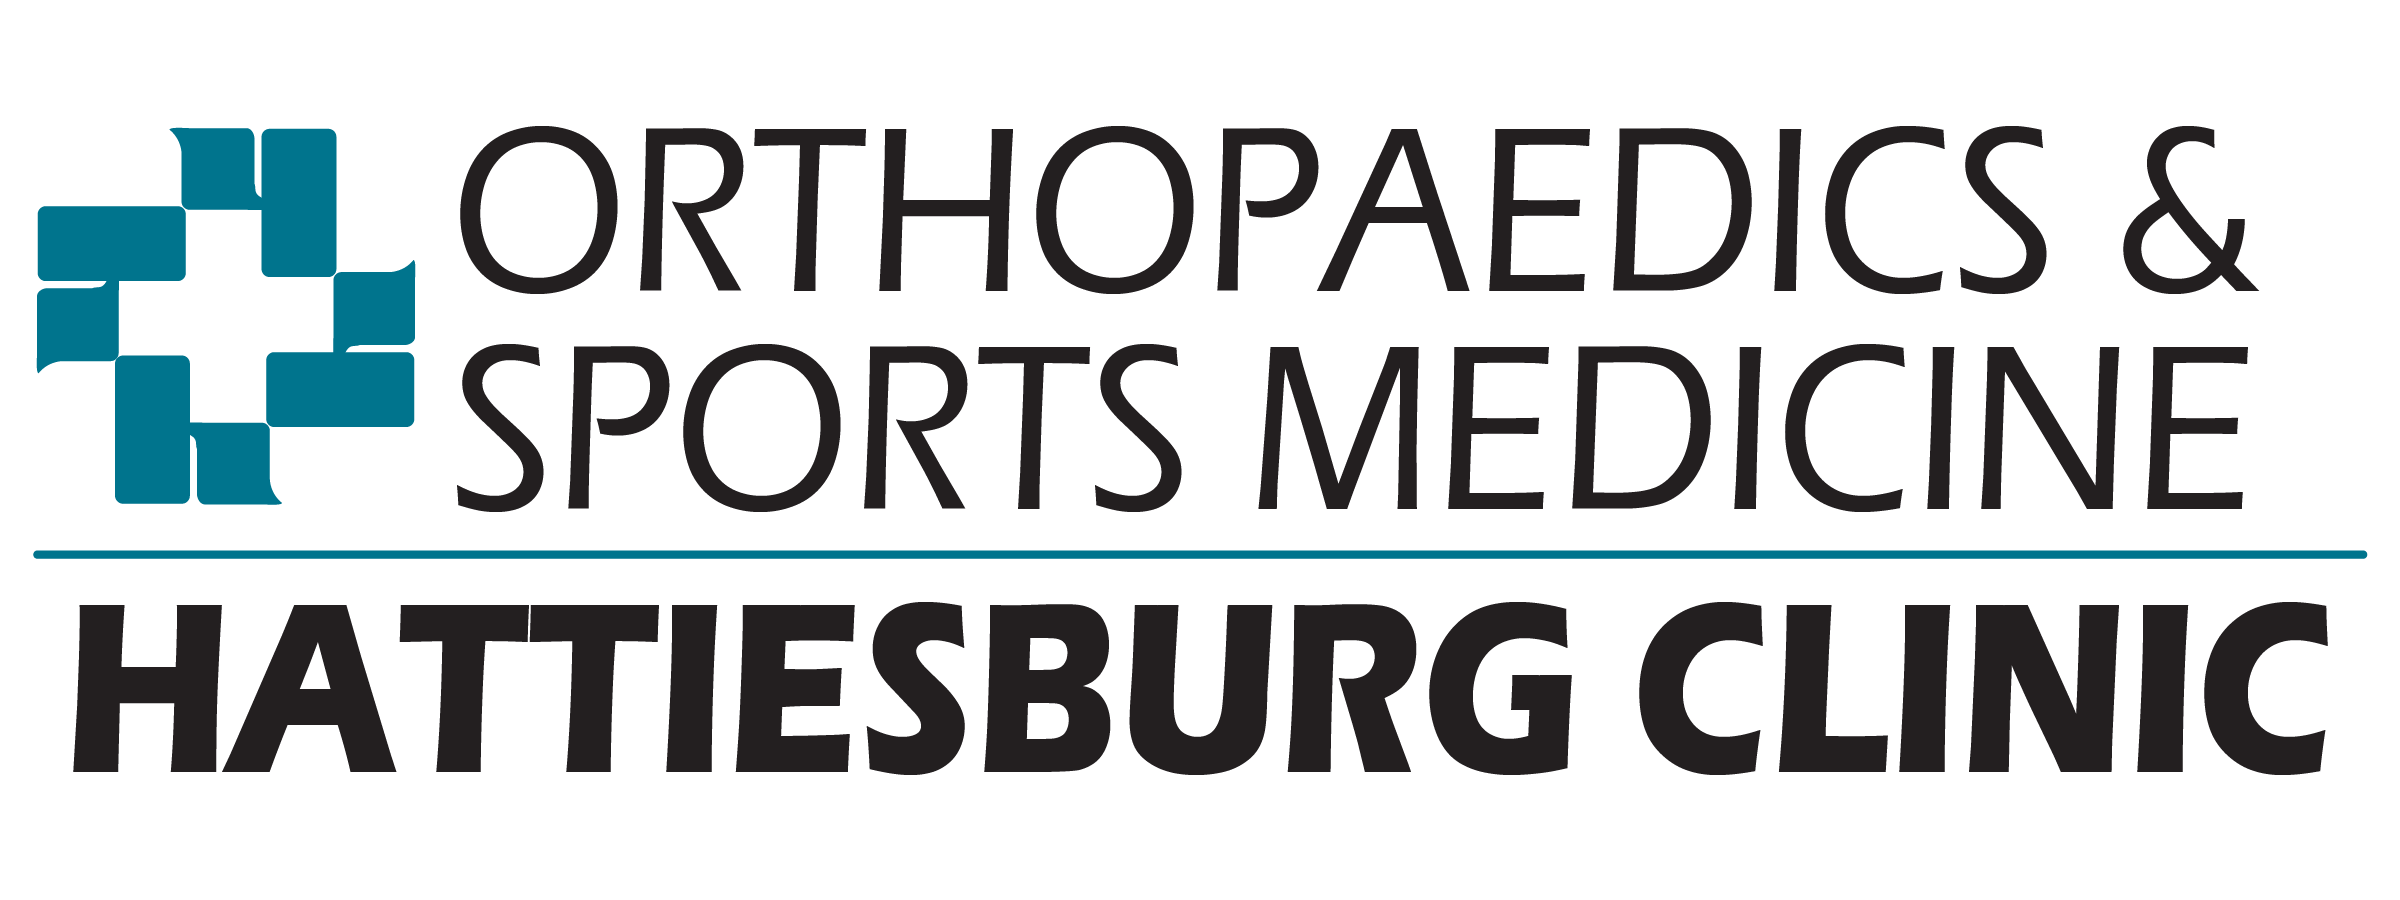 Orthopaedics & Sports Medicine logo